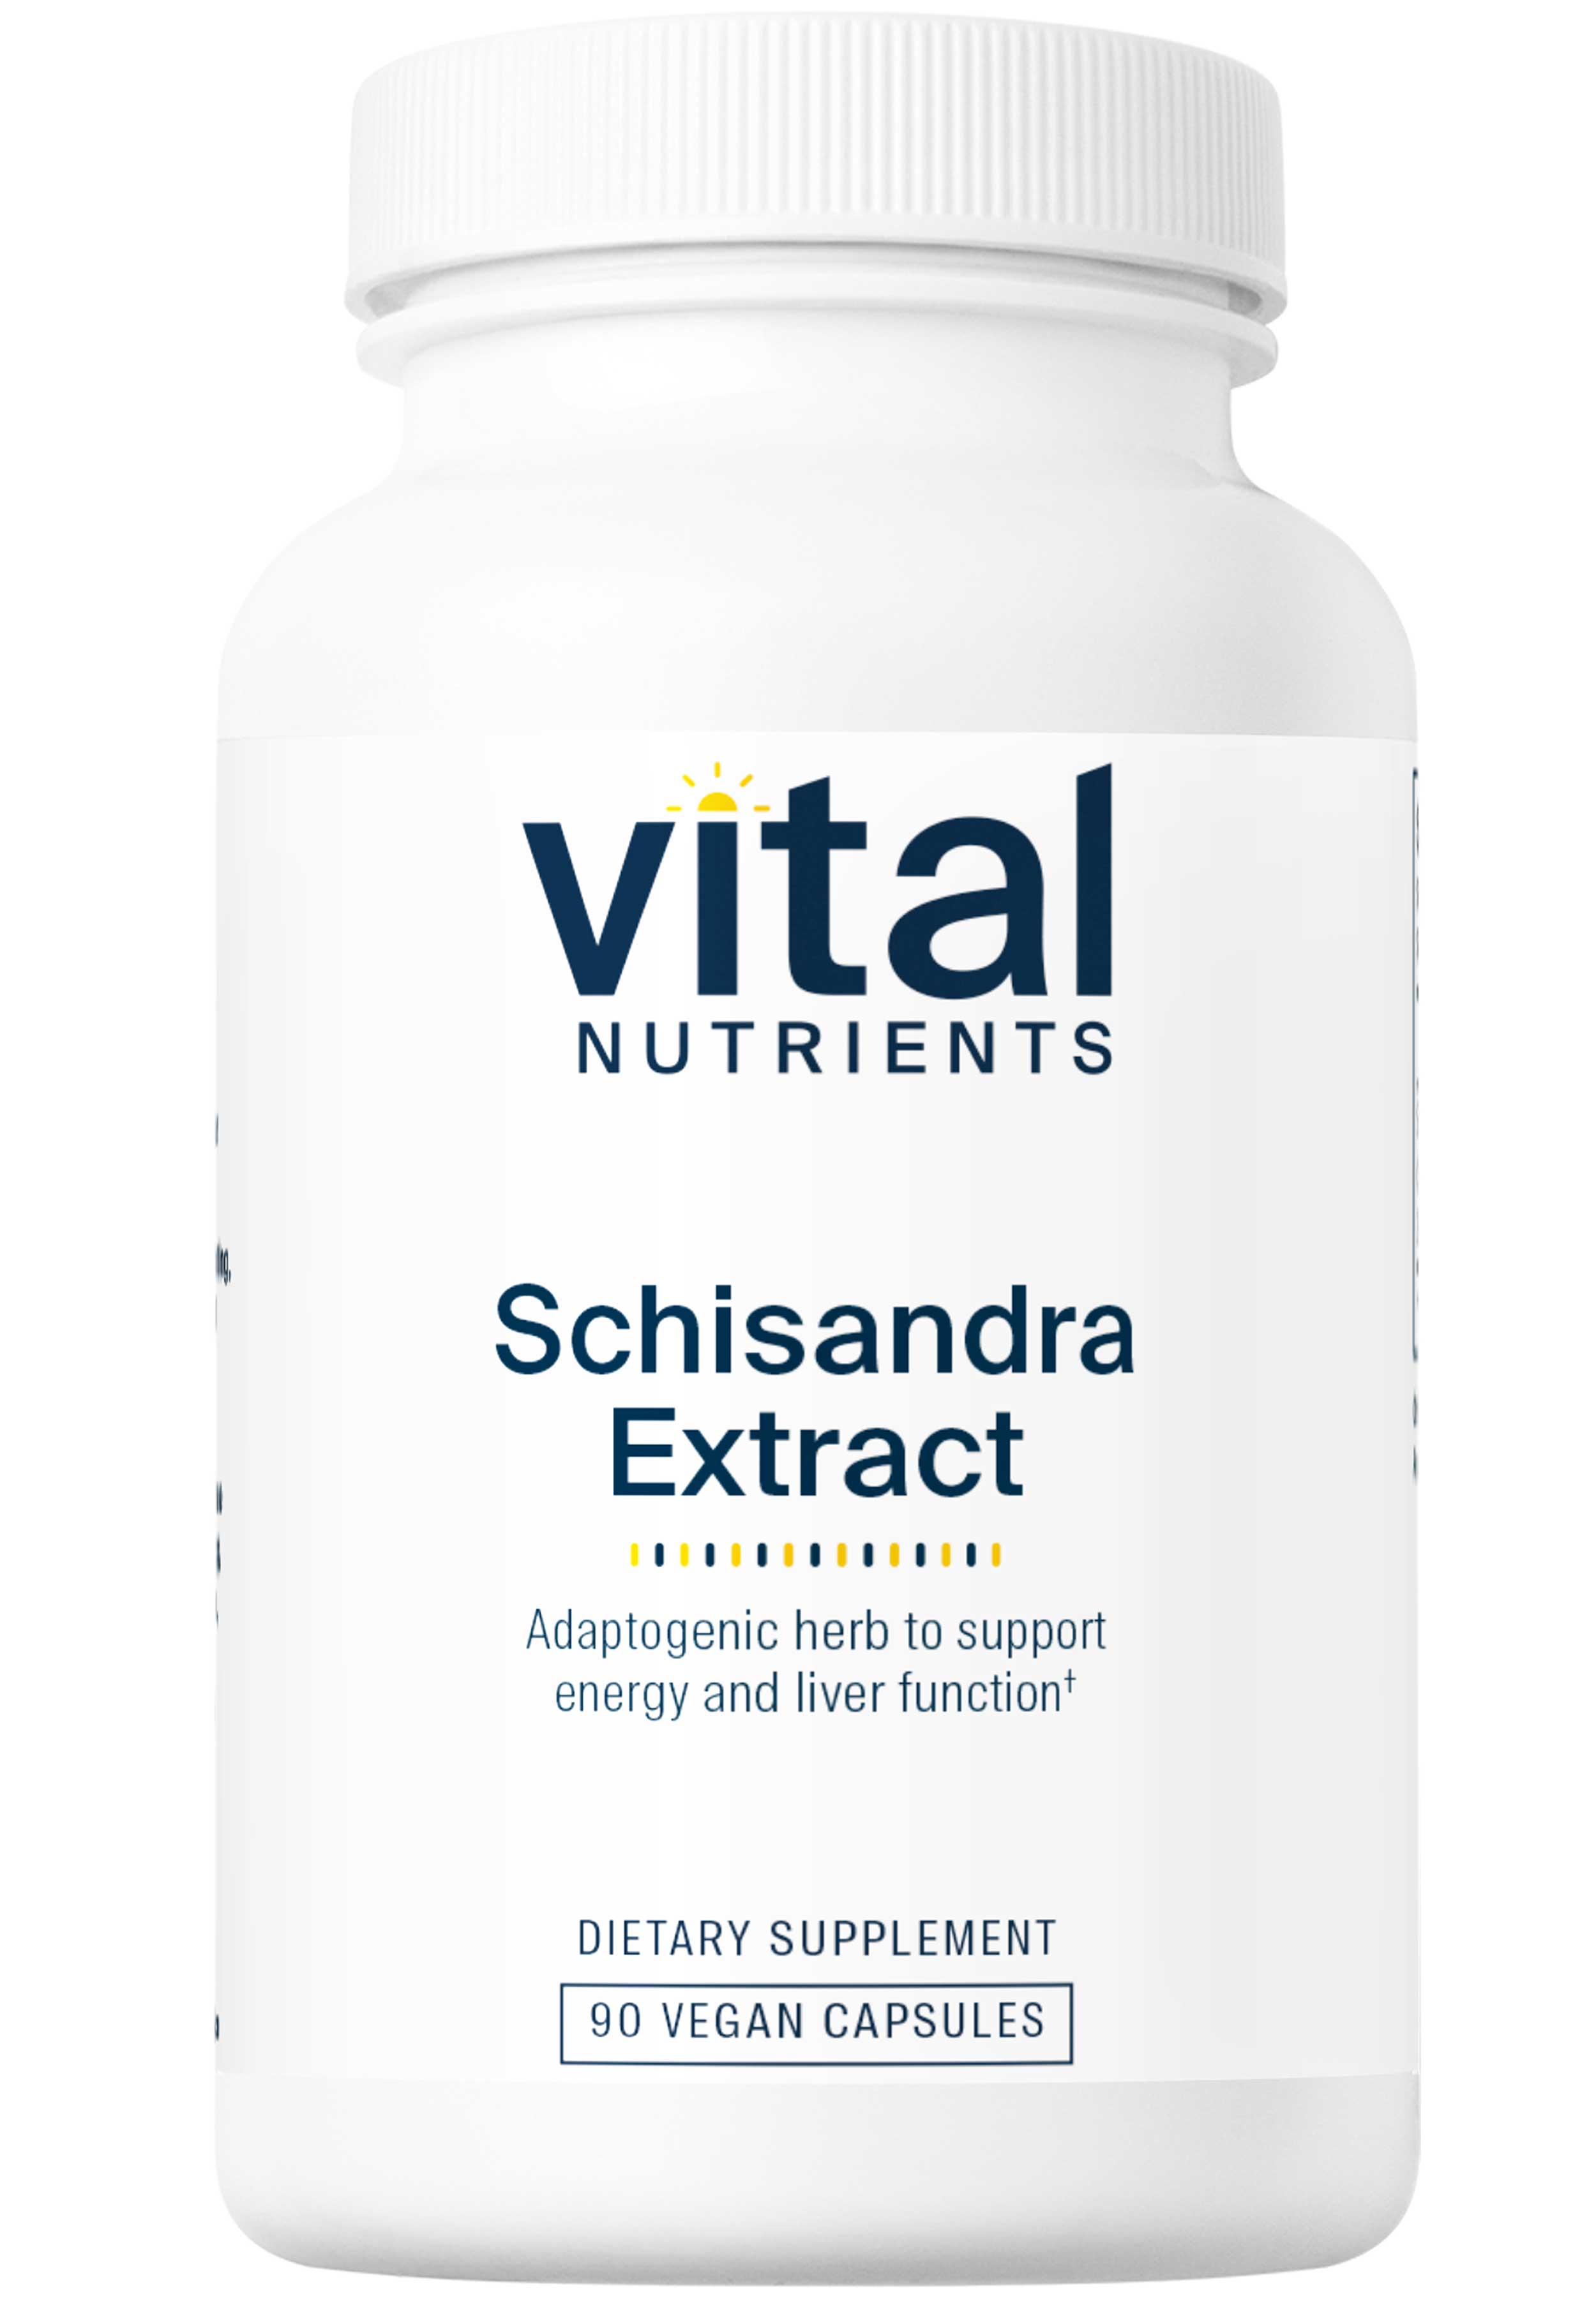 Vital Nutrients Schisandra Extract